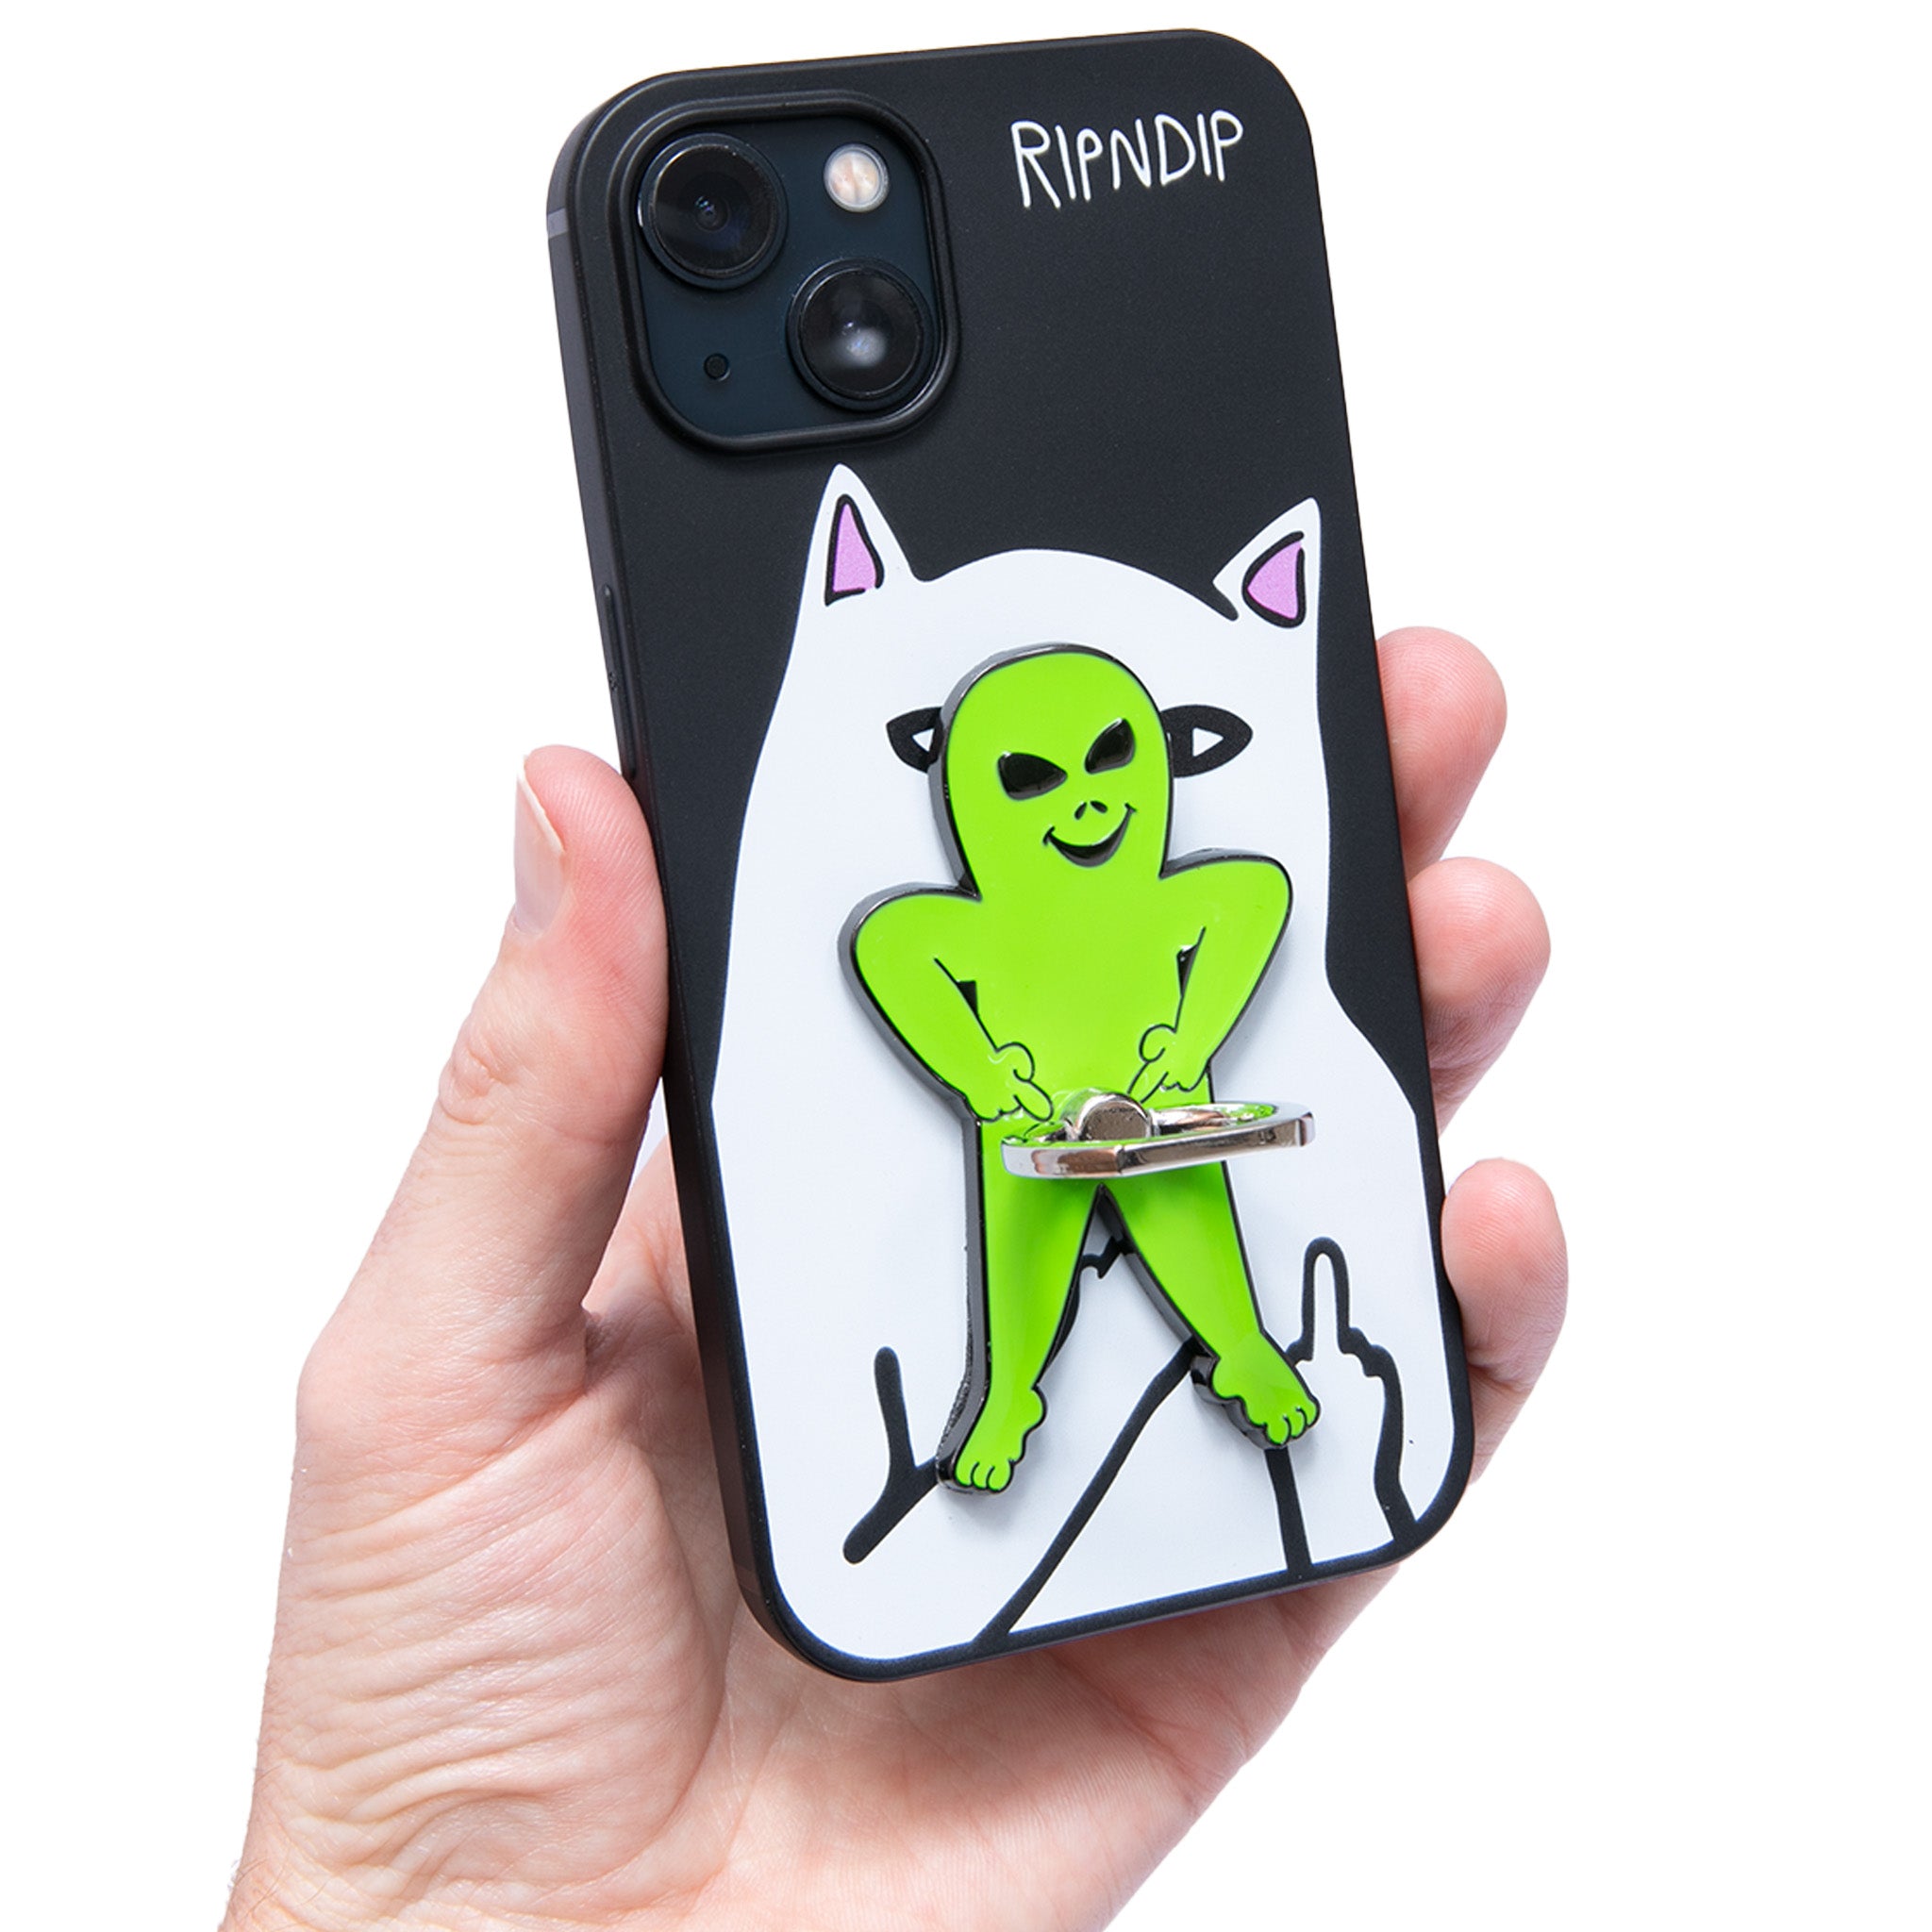 RIPNDIP Lord Alien Ring Phone Holder (Green)